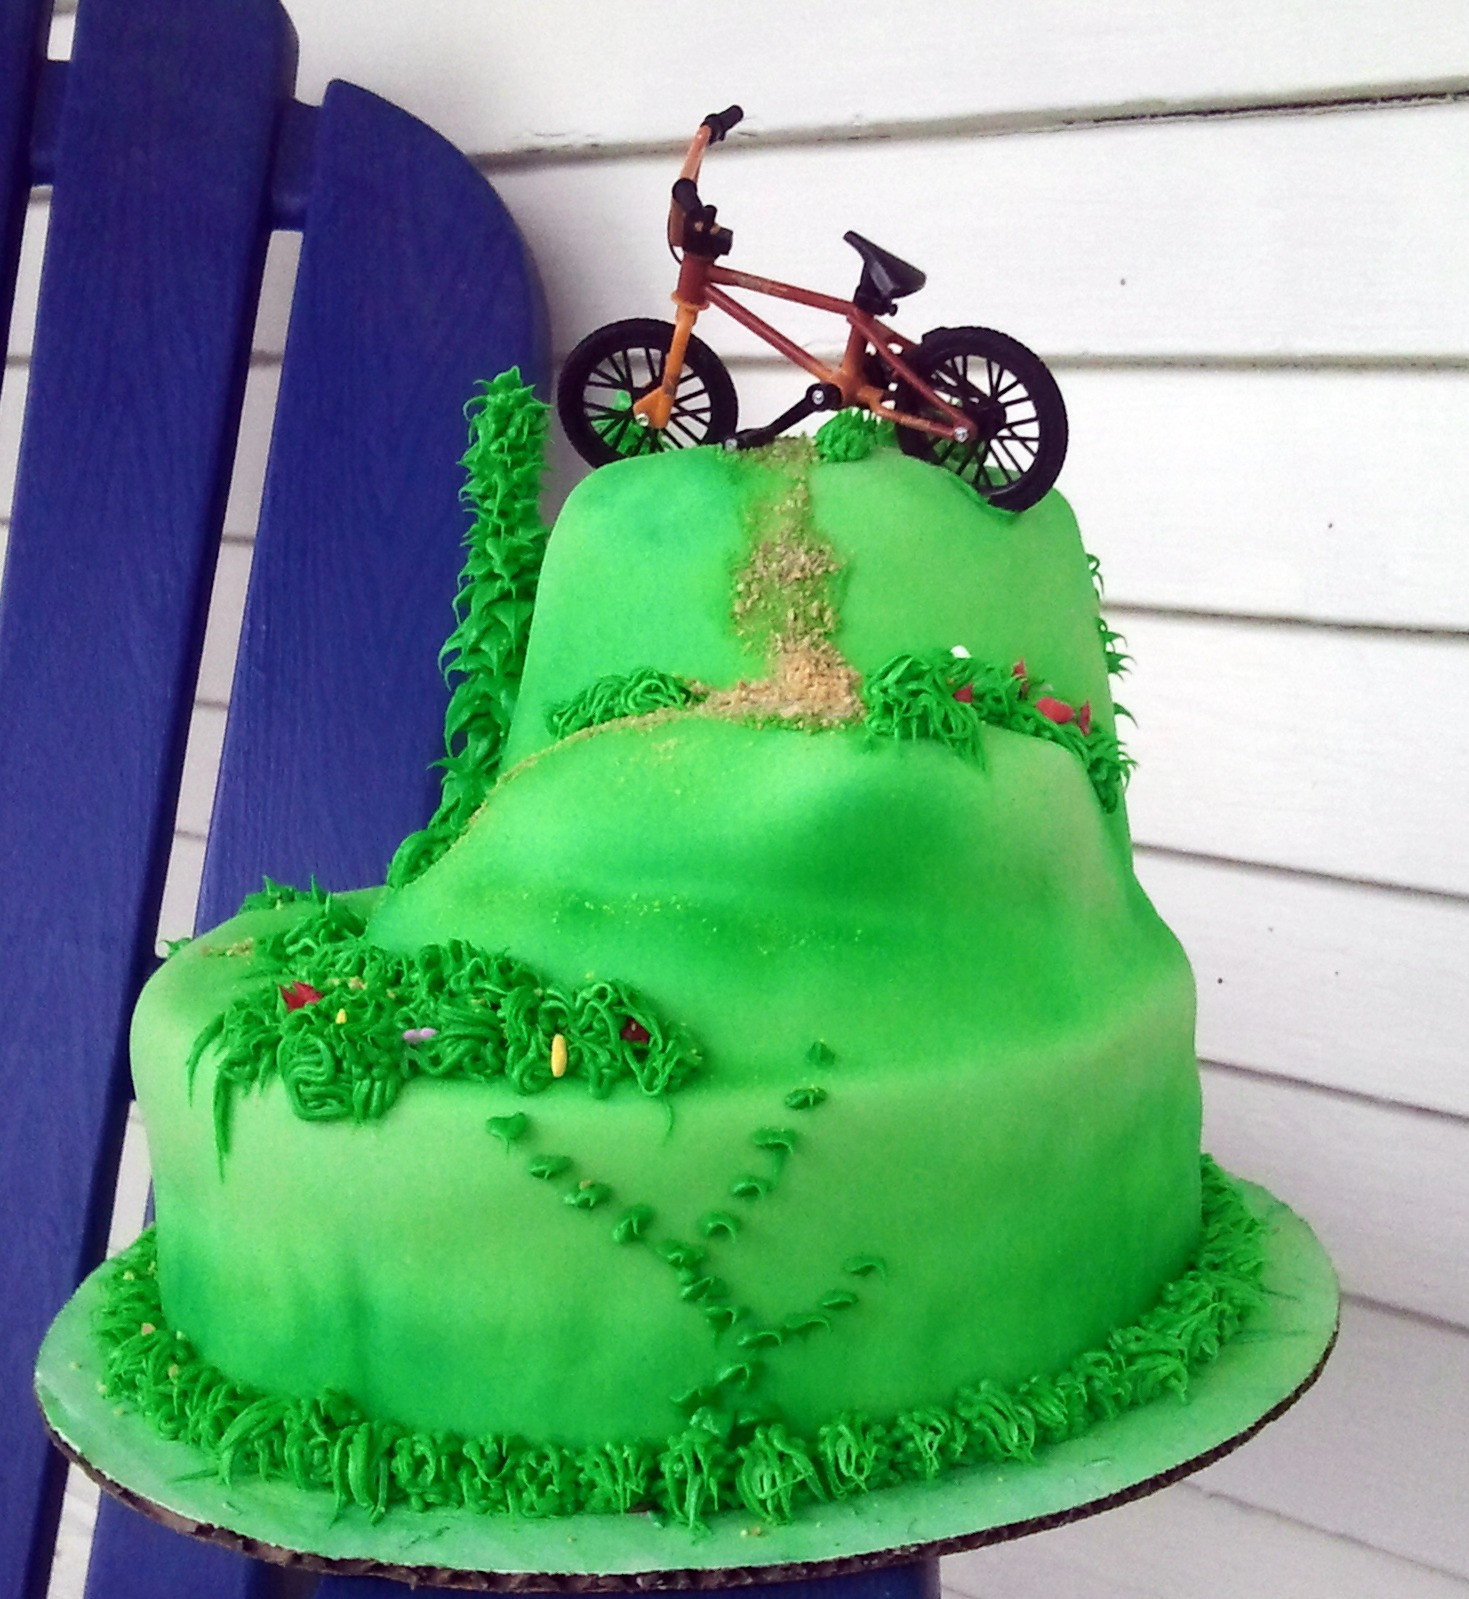 Bicycle Birthday Cake
 The Cake Villain Mountain Bike Birthday Cake